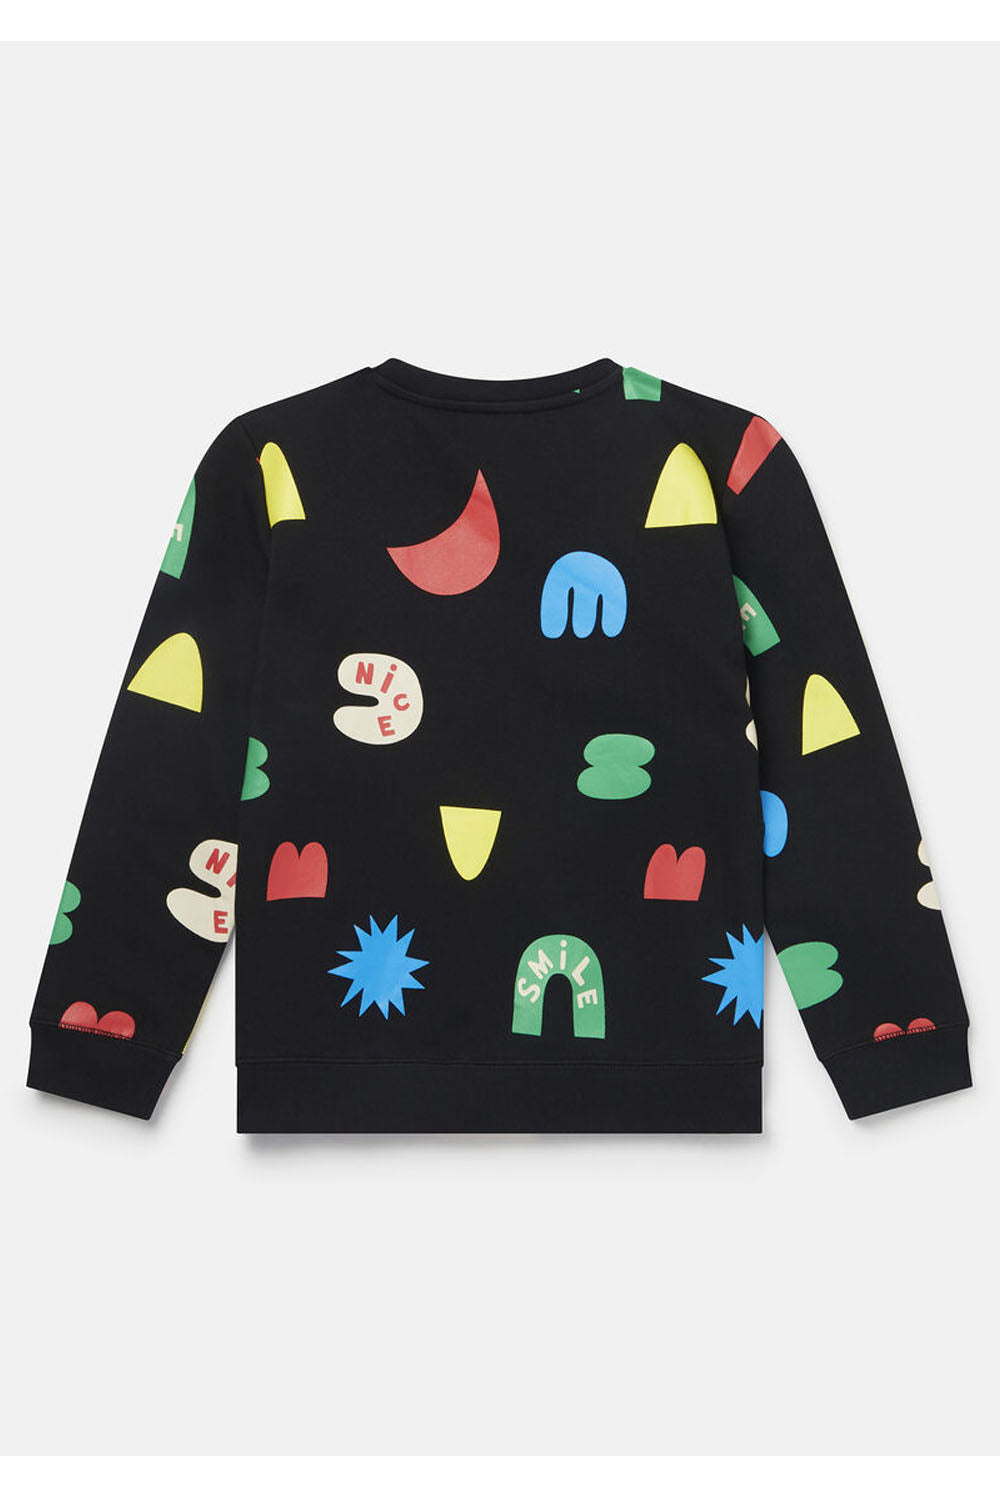 Shapes Sweatshirt for Boys - Maison7